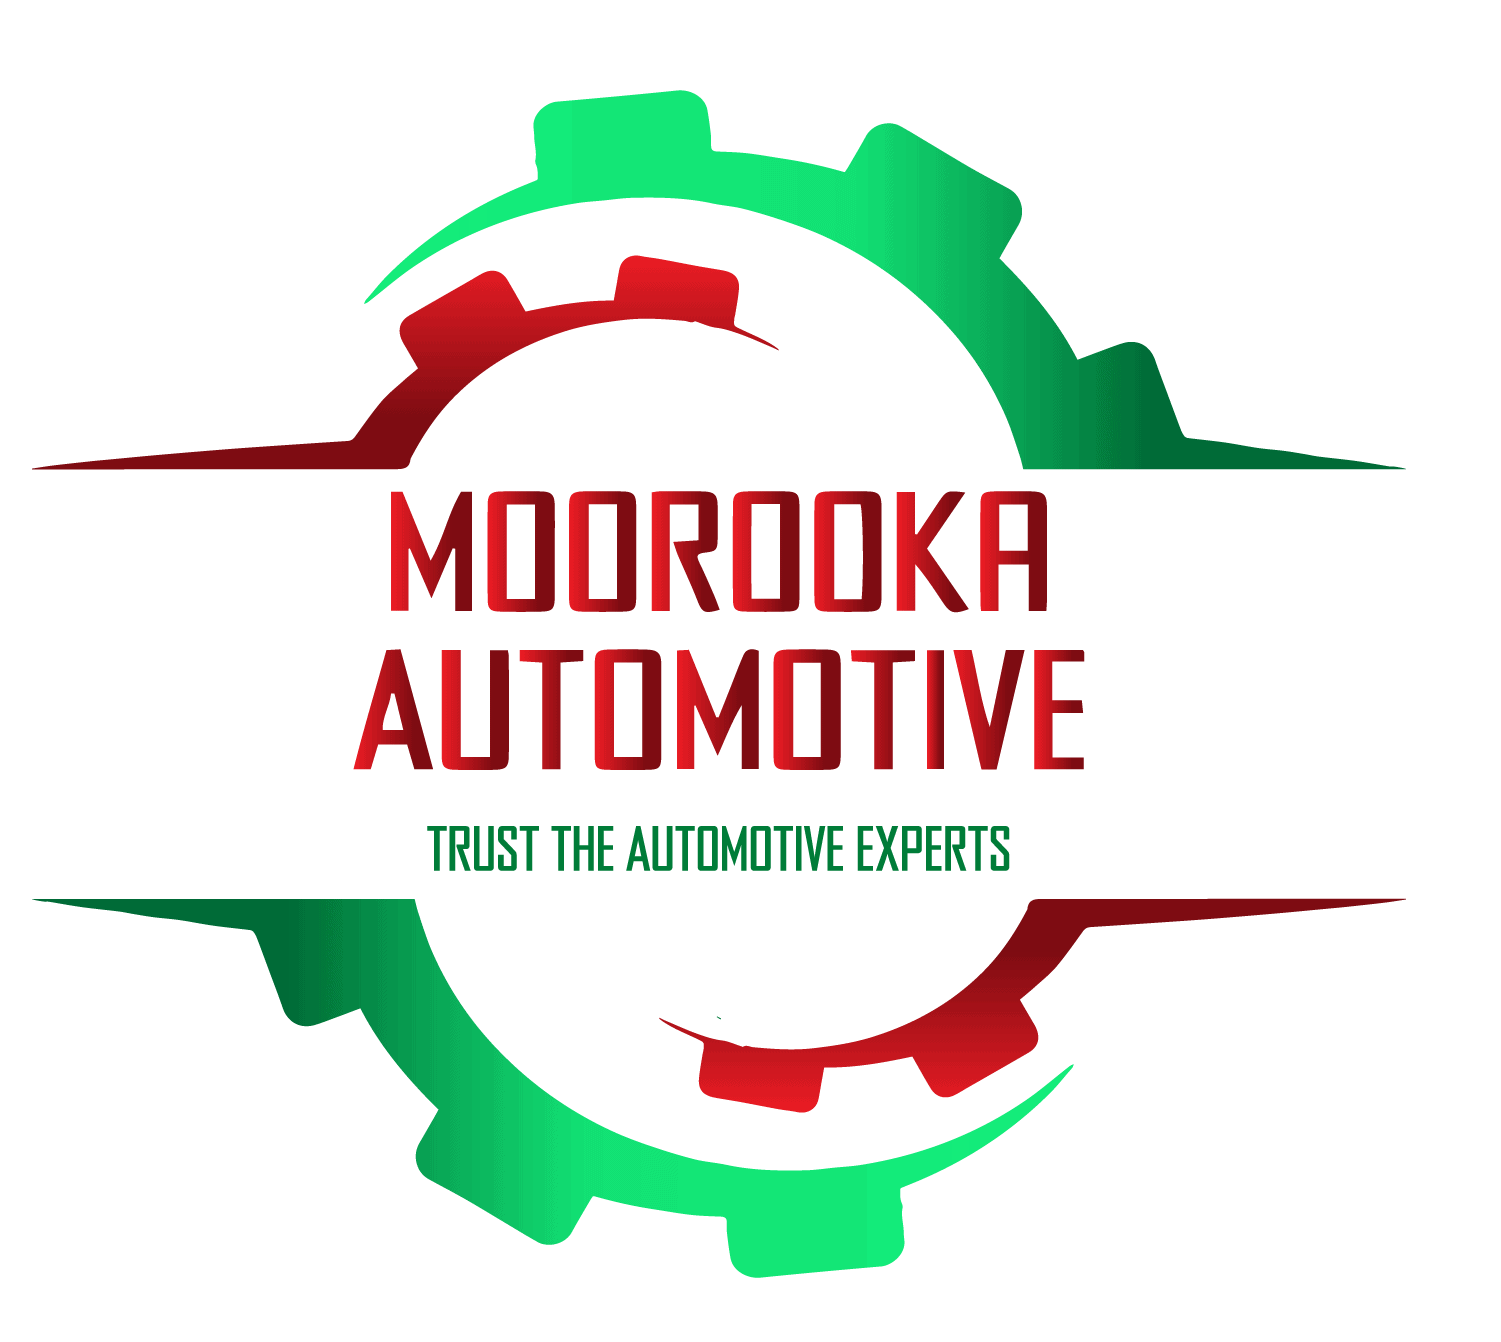 Moorooka Automotive Icon